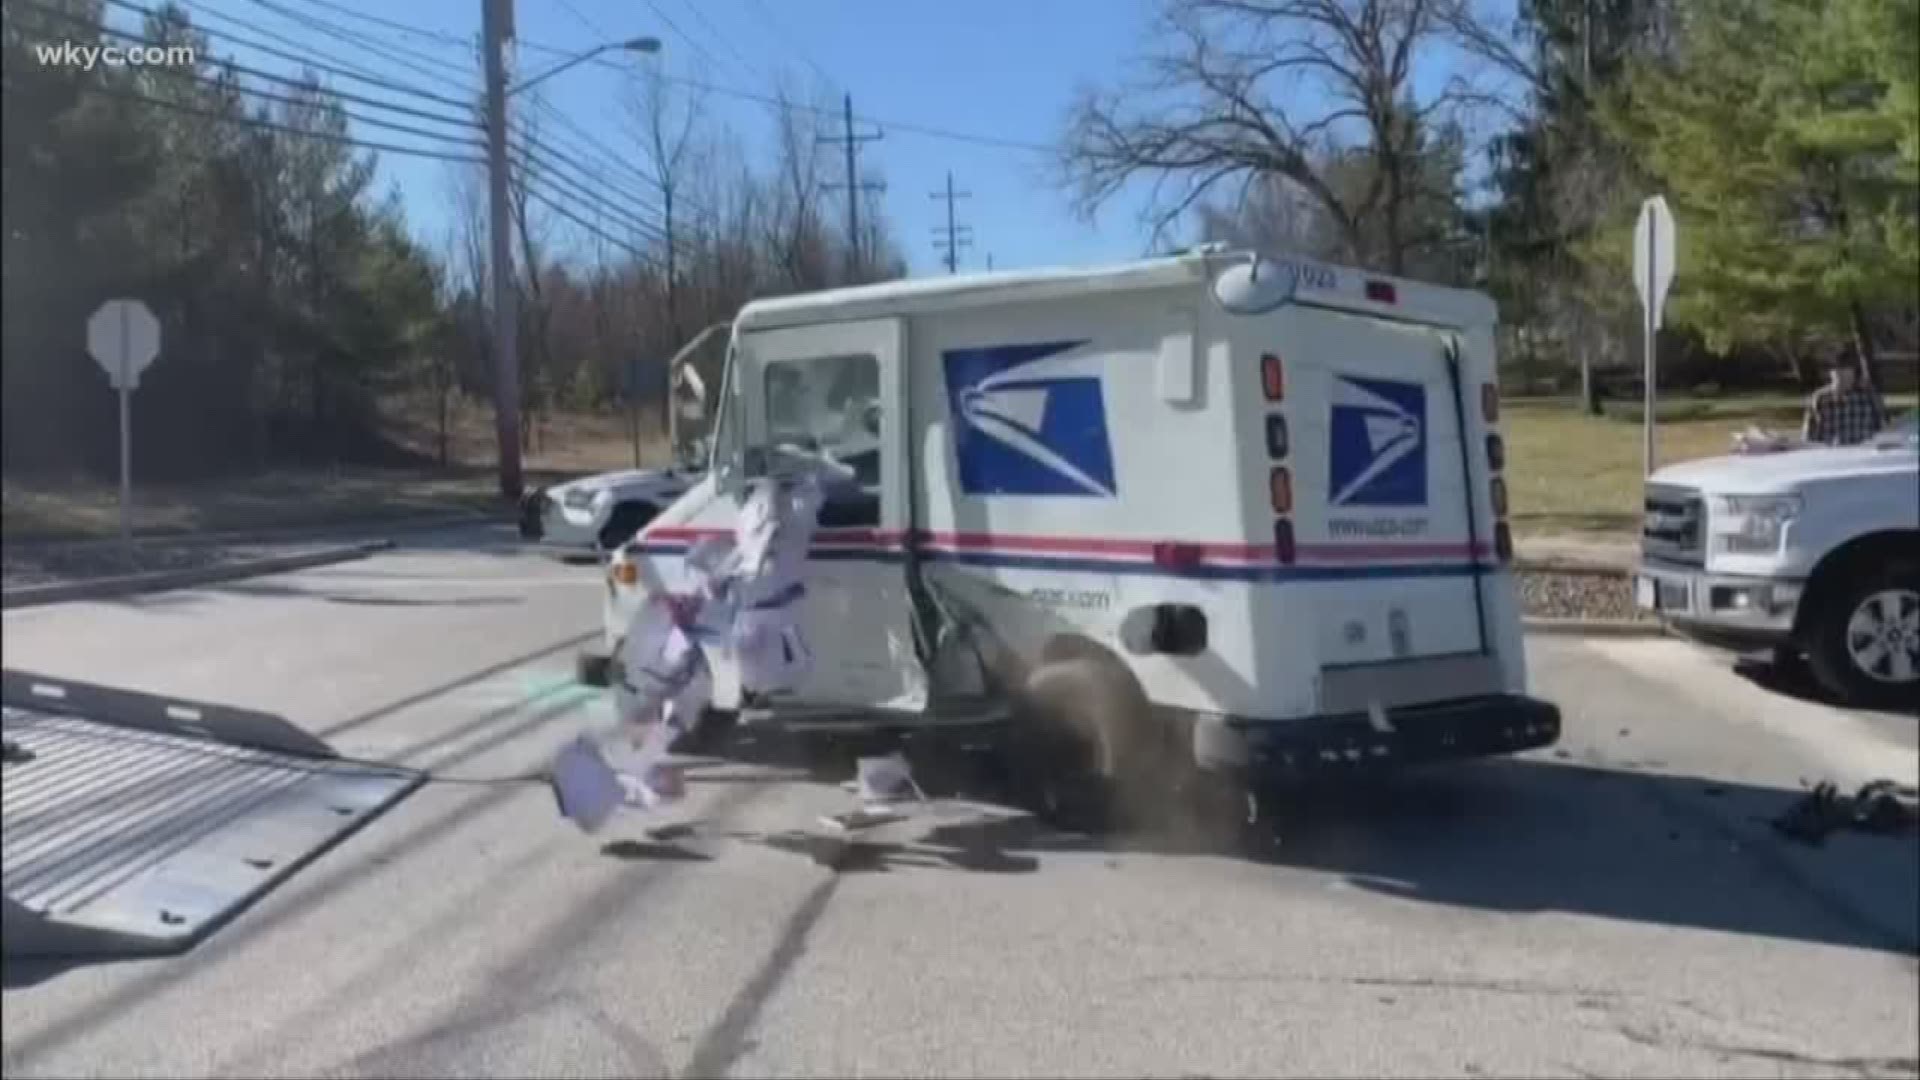 Mail truck involved in crash in Pepper Pike